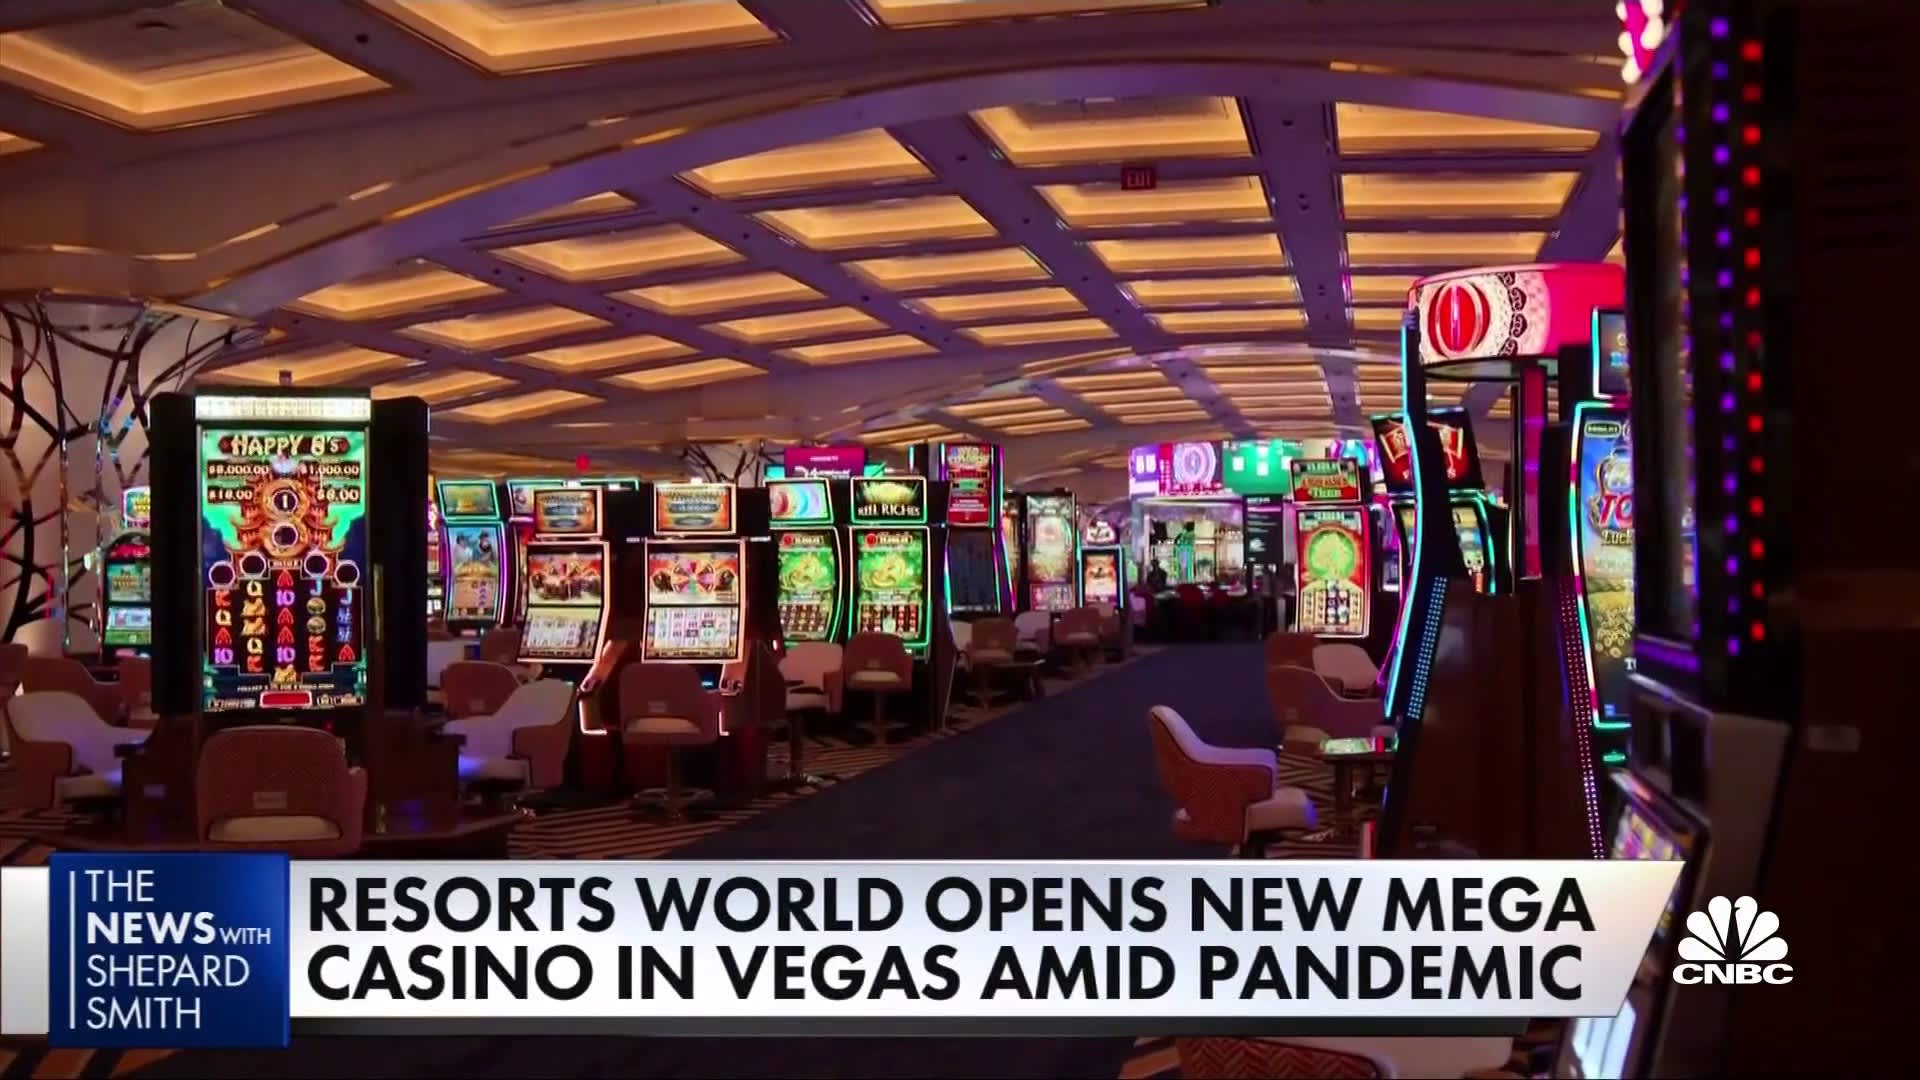 Resorts World opens new mega casino in Las Vegas amid pandemic